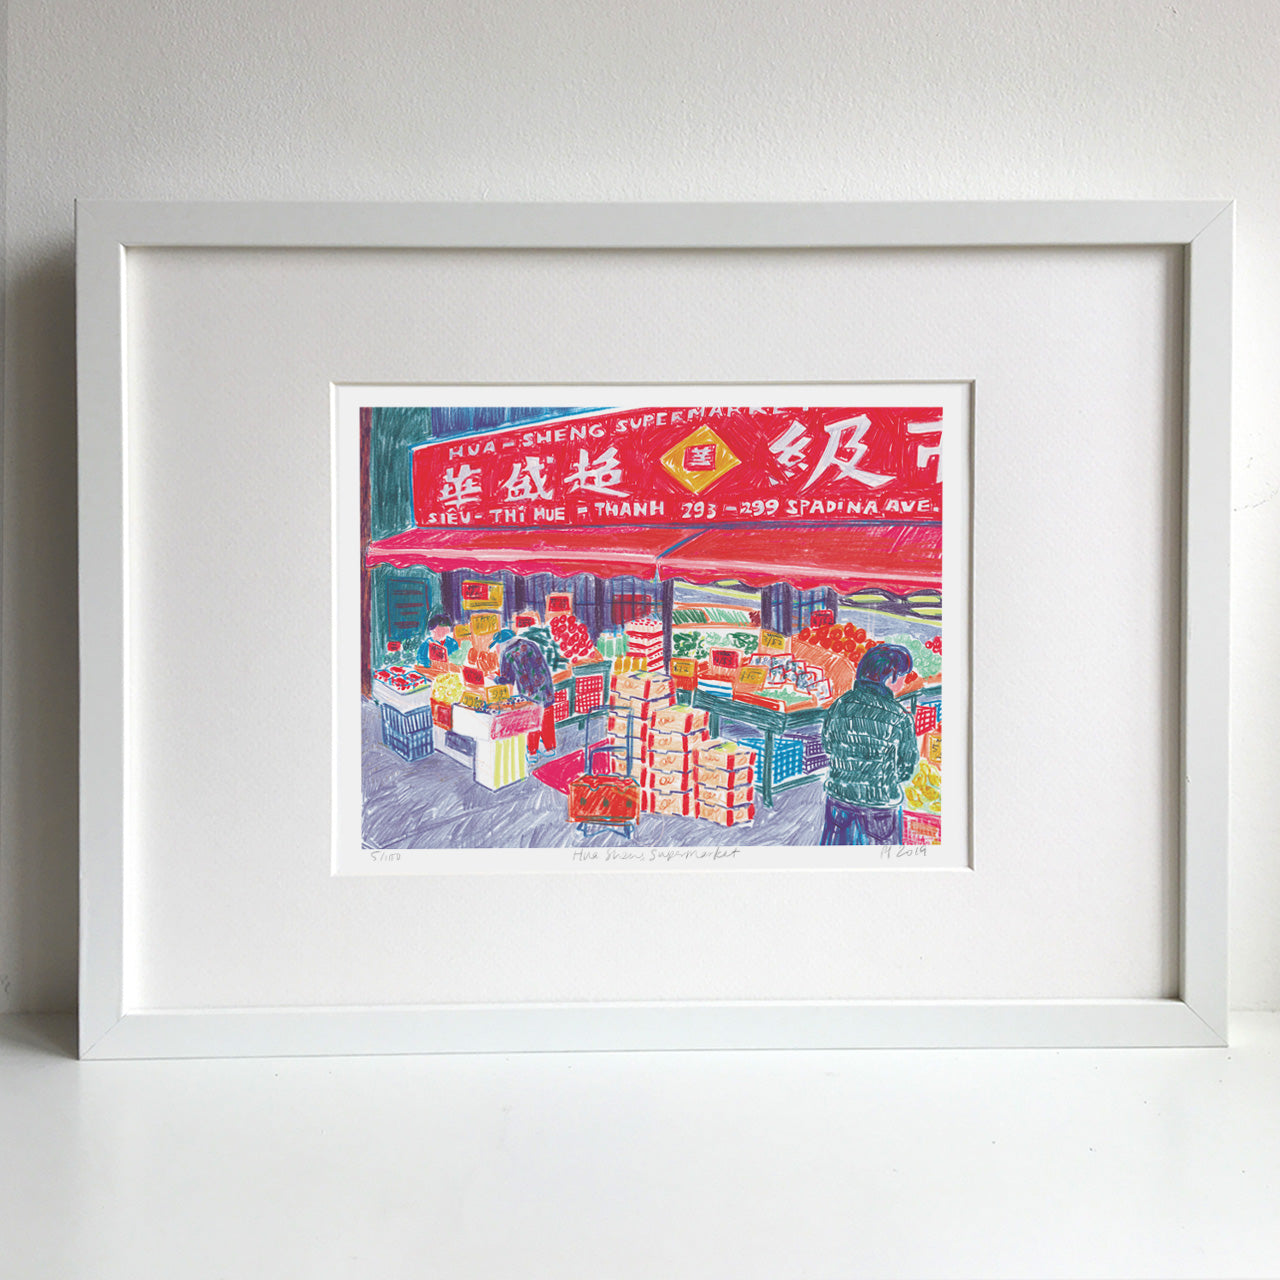 Hua Sheng Supermarket Limited Edition Giclée Print